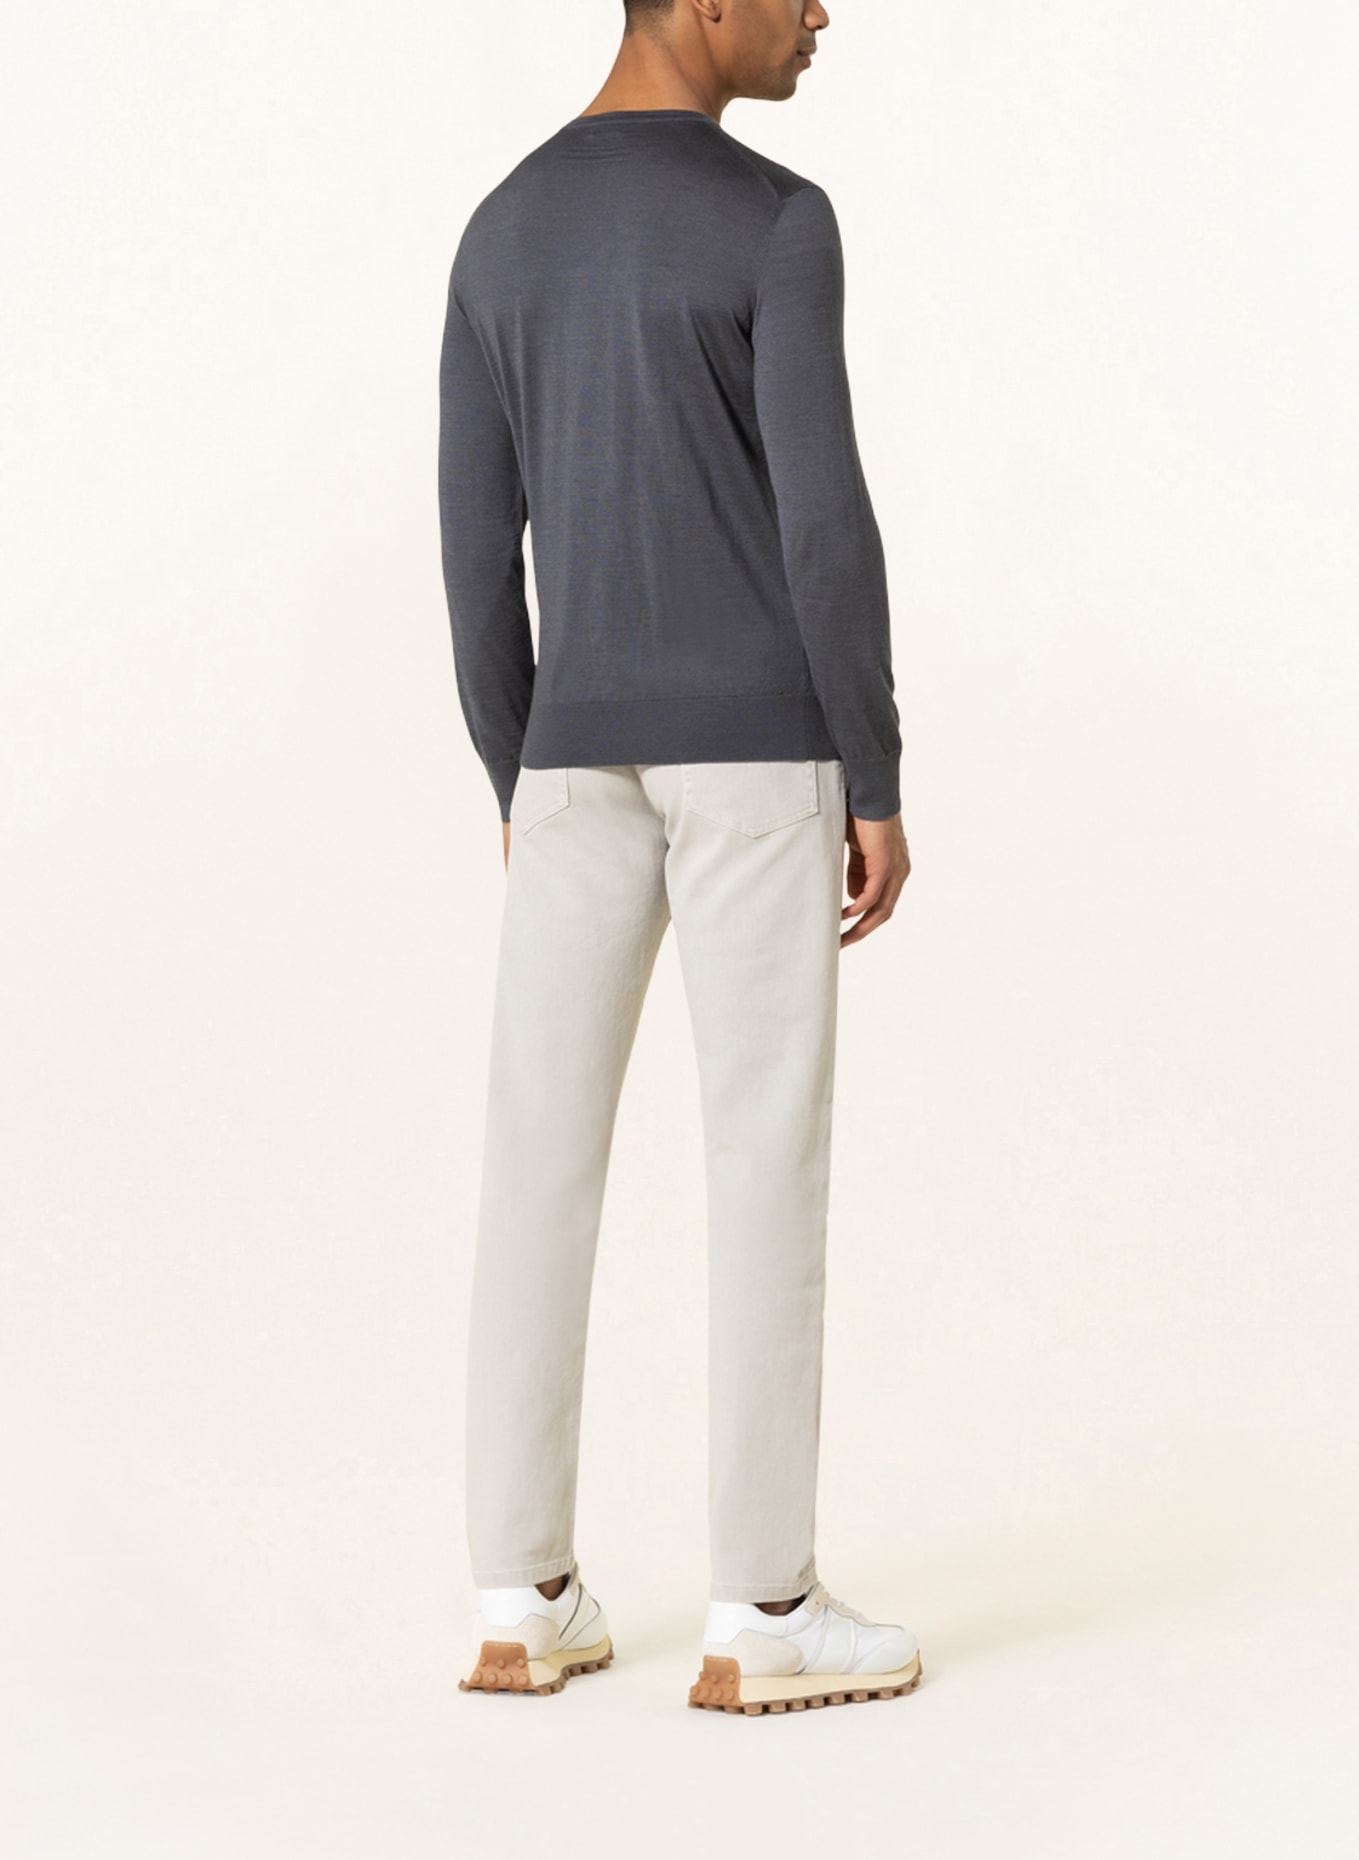 ZEGNA Cashmere-Pullover mit Seide, Farbe: DUNKELGRAU (Bild 3)